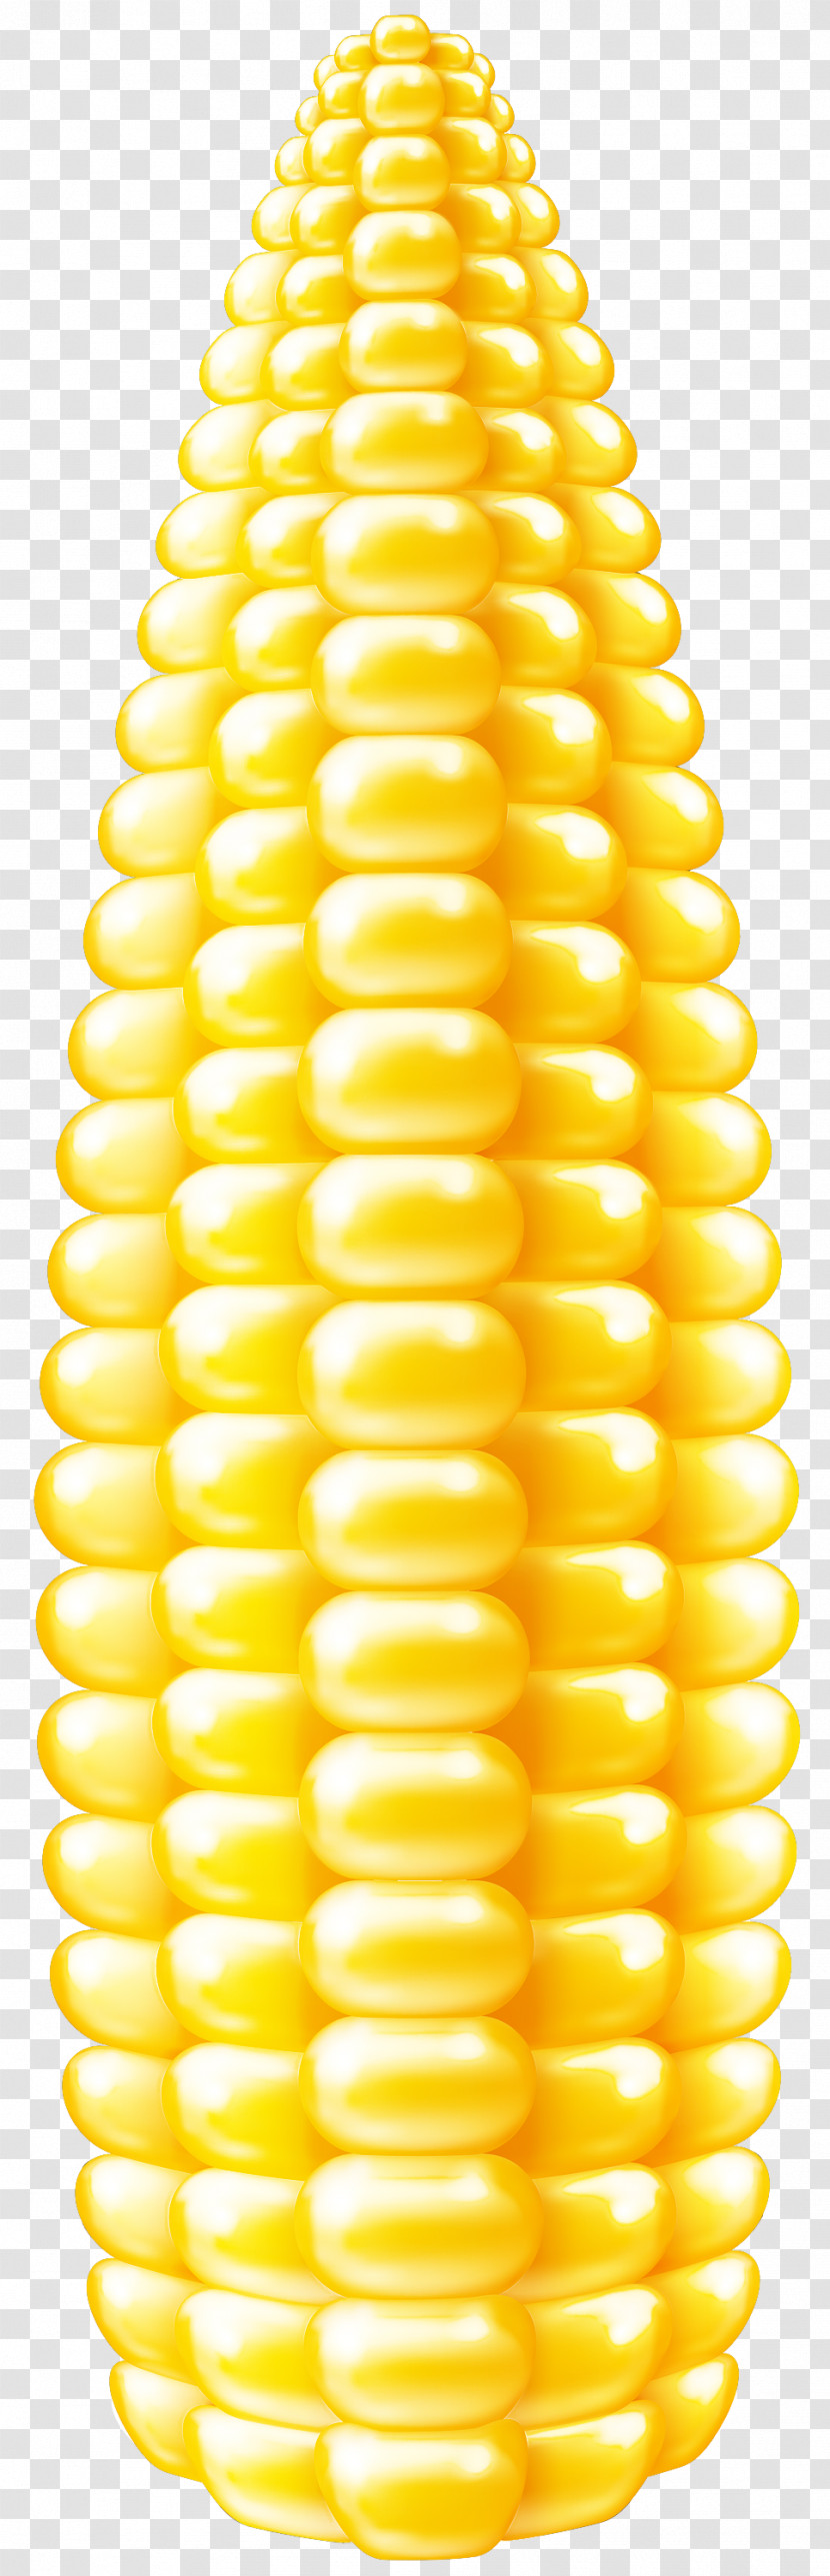 Yellow Corn Kernels Corn On The Cob Vegetarian Food Sweet Corn Transparent PNG